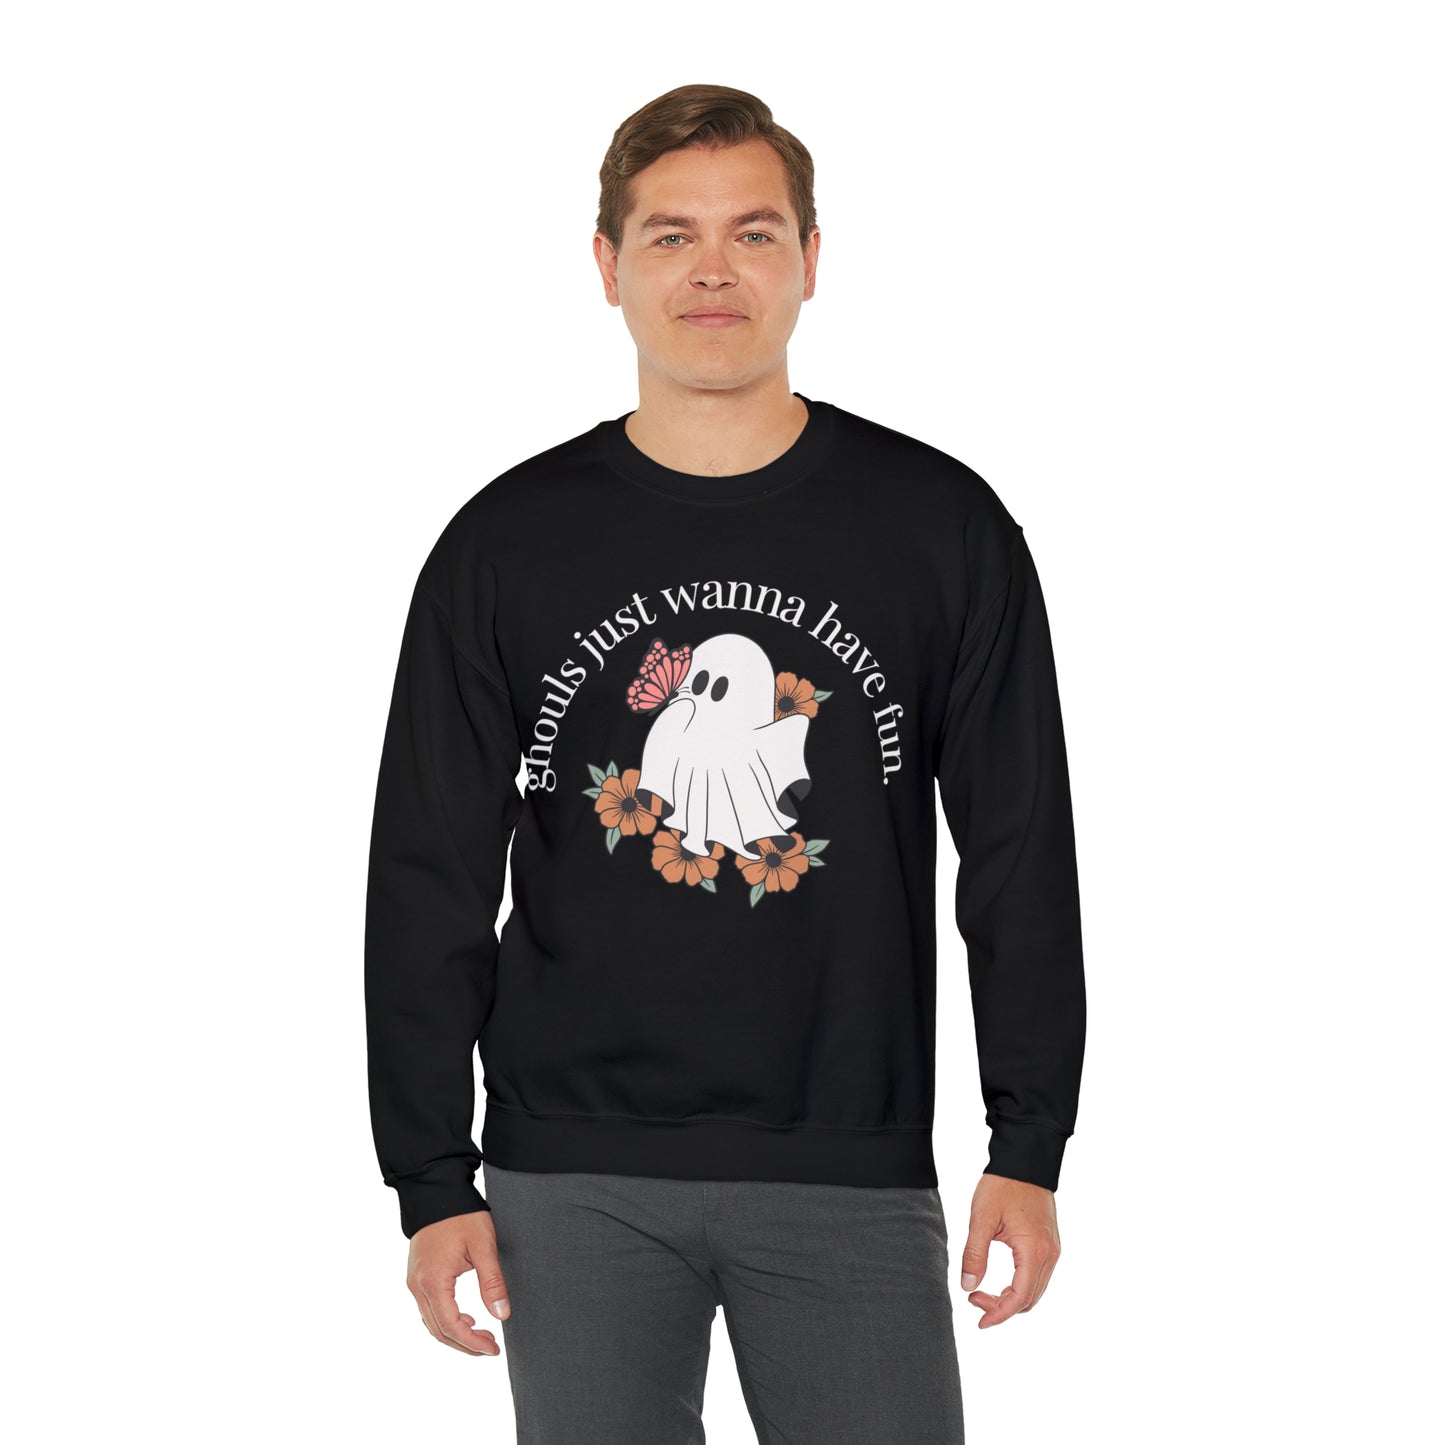 Ghouls Just Wanna Have Fun Sweatshirt